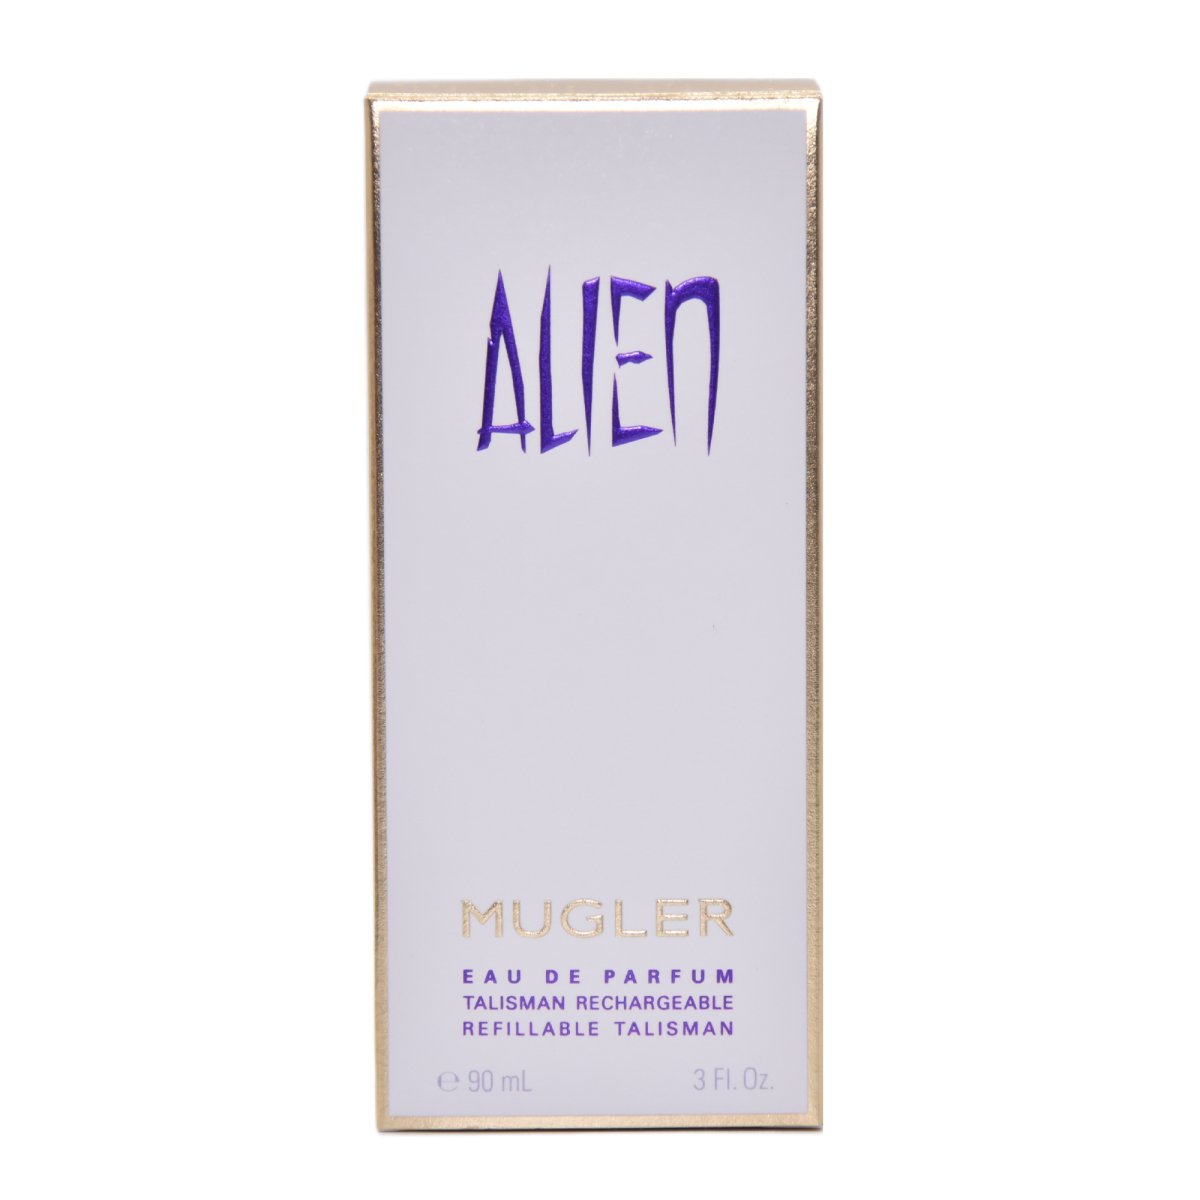 Alien by Thierry Mugler Eau De Parfum Spray Women - Perfume Headquarters - Thierry Mugler - 3.0 oz - Eau de Parfum - Fragrance - 3439600056969 - Fragrance